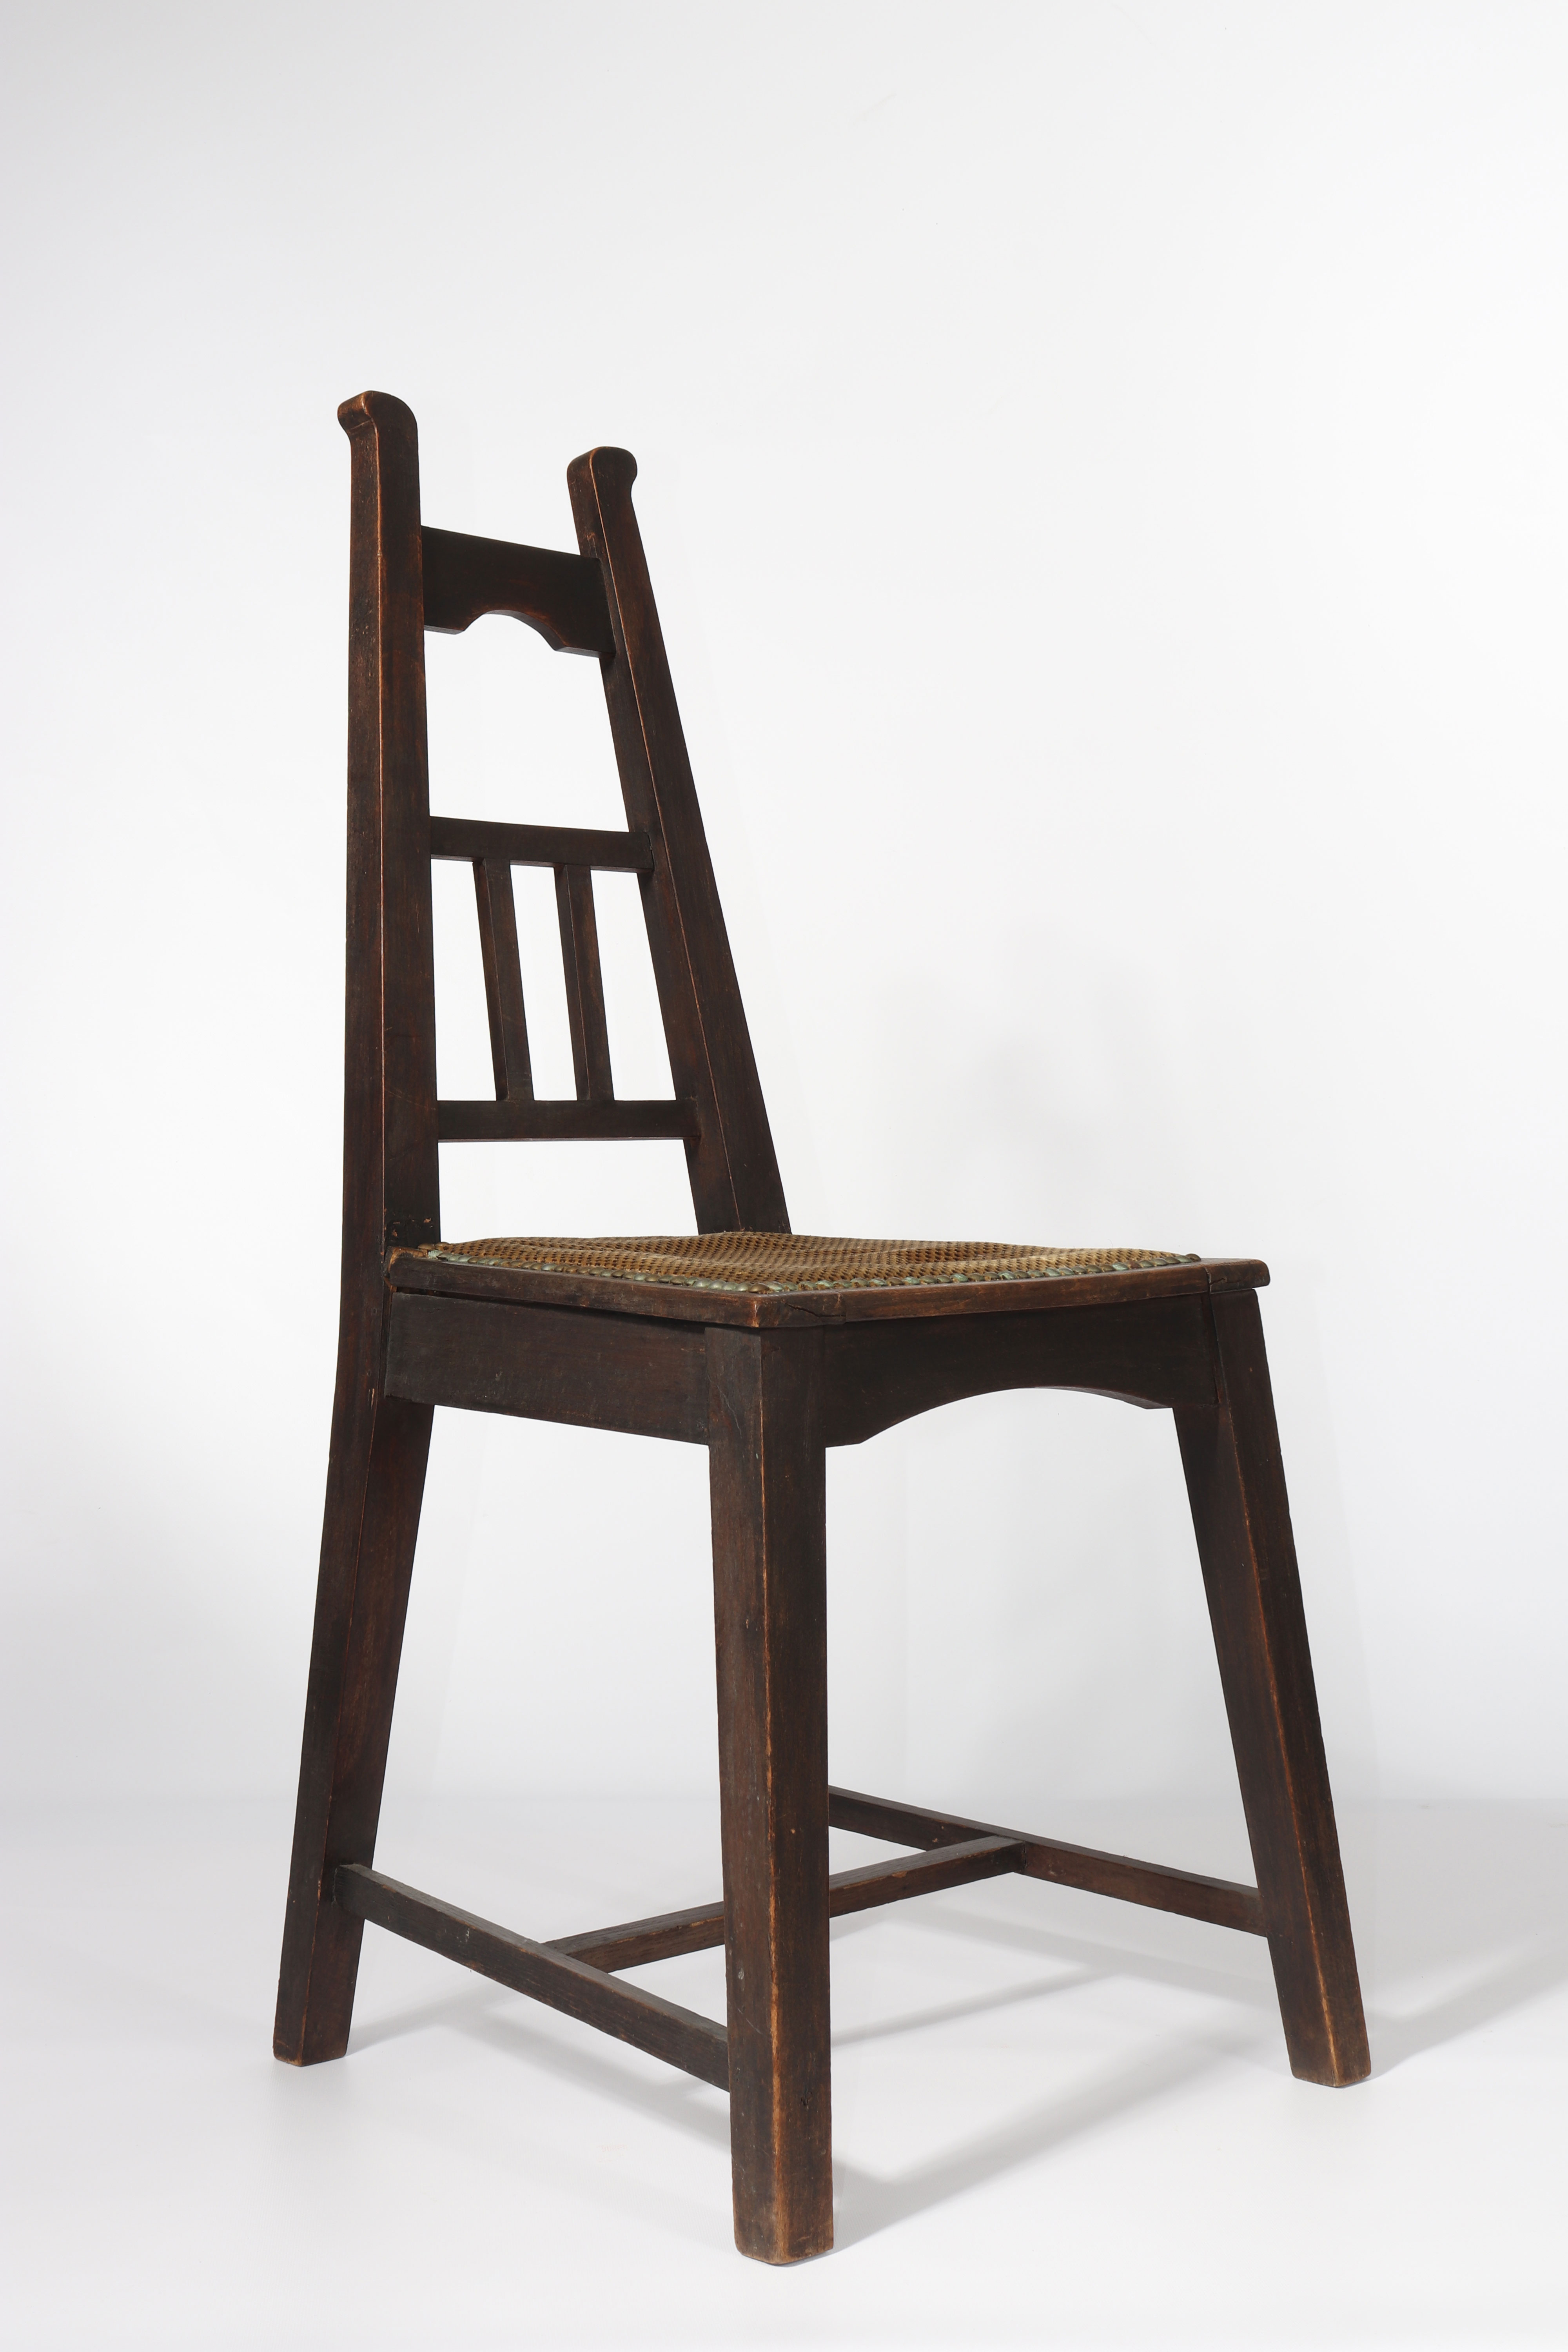 Chair around 1900